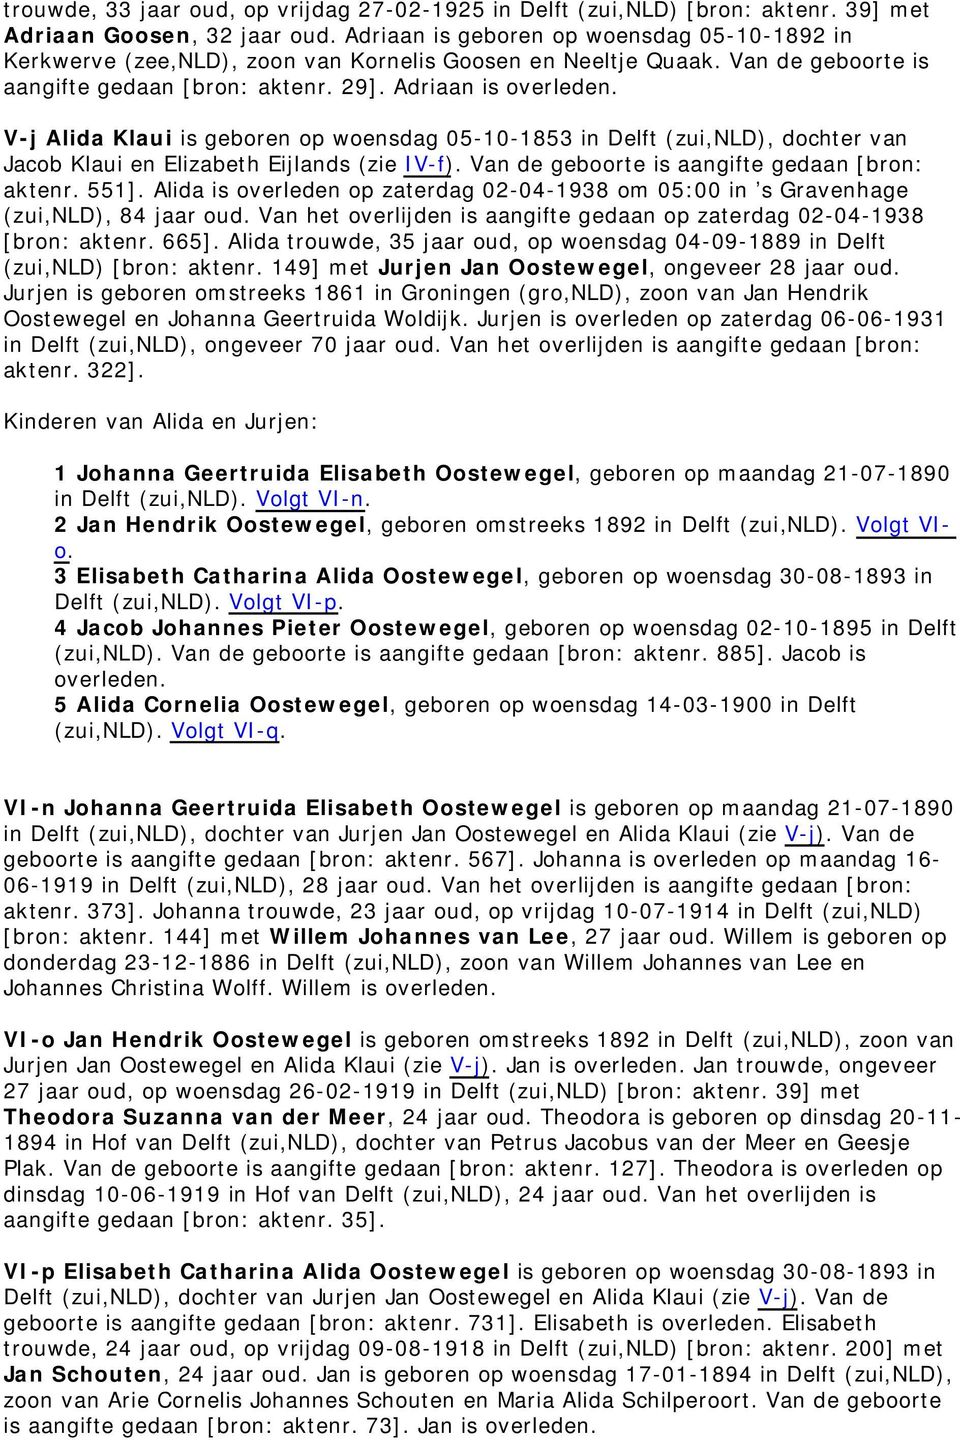 Adriaan is V-j Alida Klaui is geboren op woensdag 05-10-1853 in Delft (zui,nld), dochter van Jacob Klaui en Elizabeth Eijlands (zie IV-f). Van de geboorte is aangifte gedaan [bron: aktenr. 551].